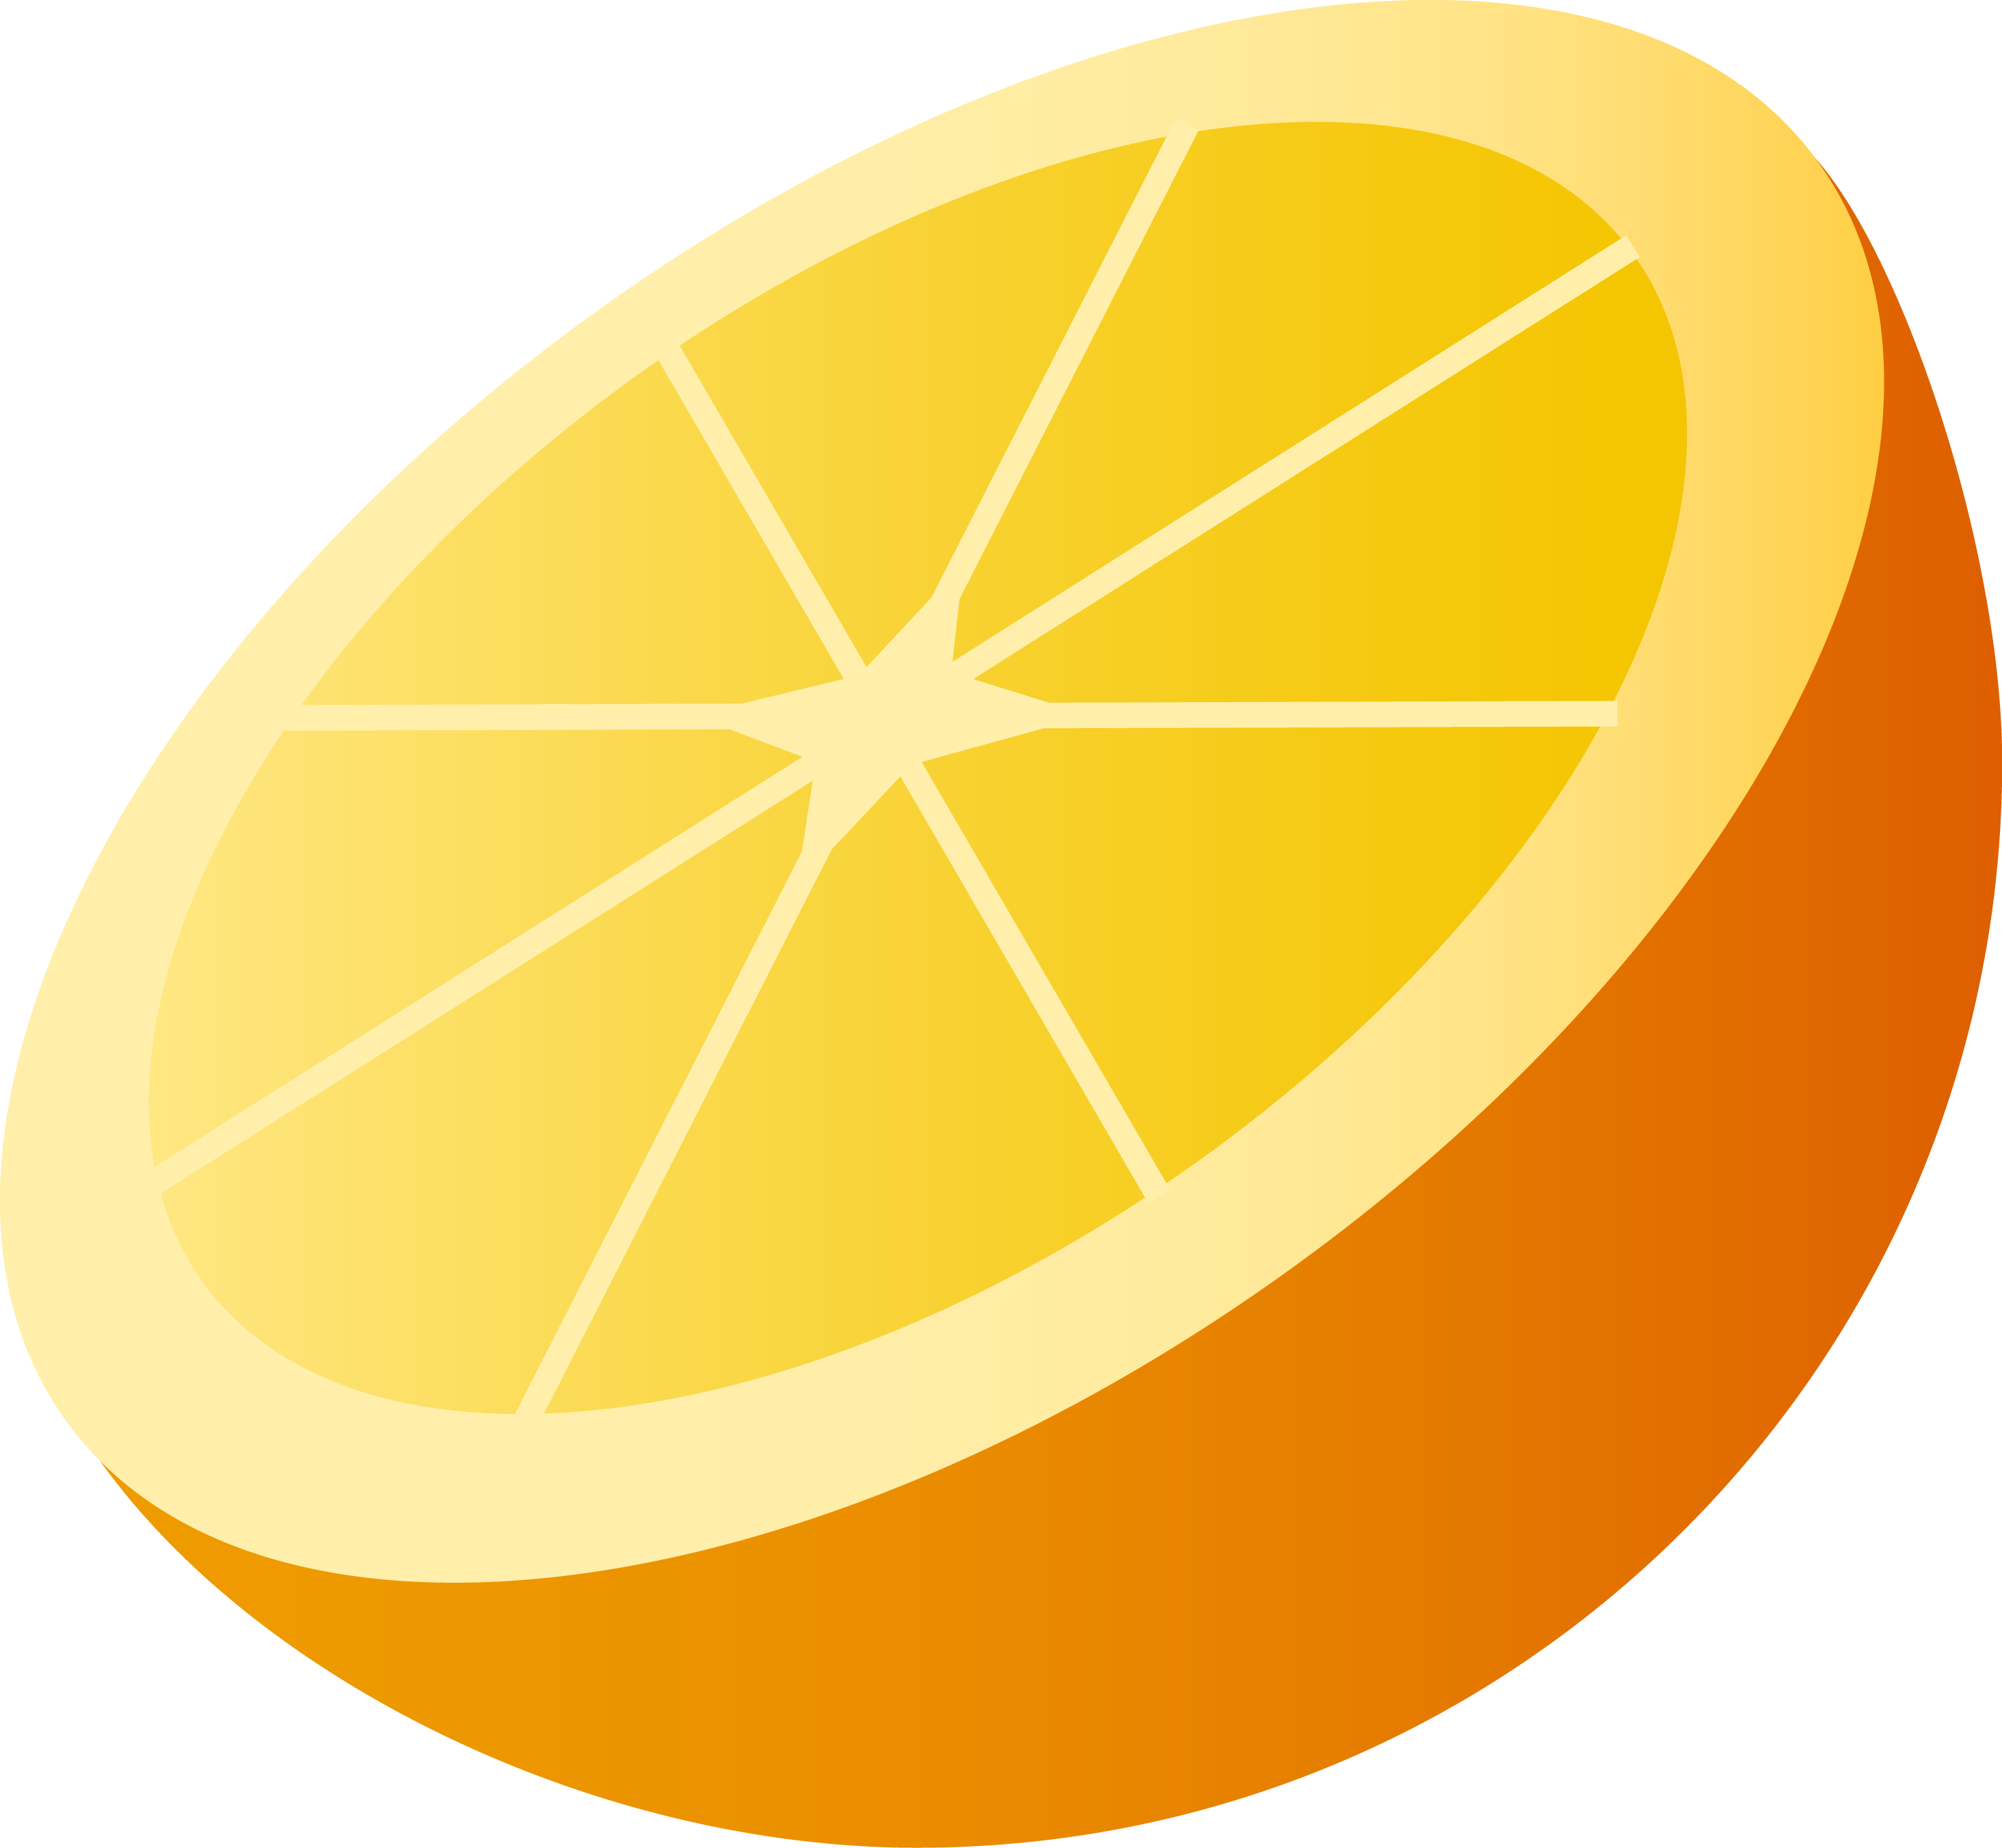 Juicy Orange Half Slice - Free Clip Art